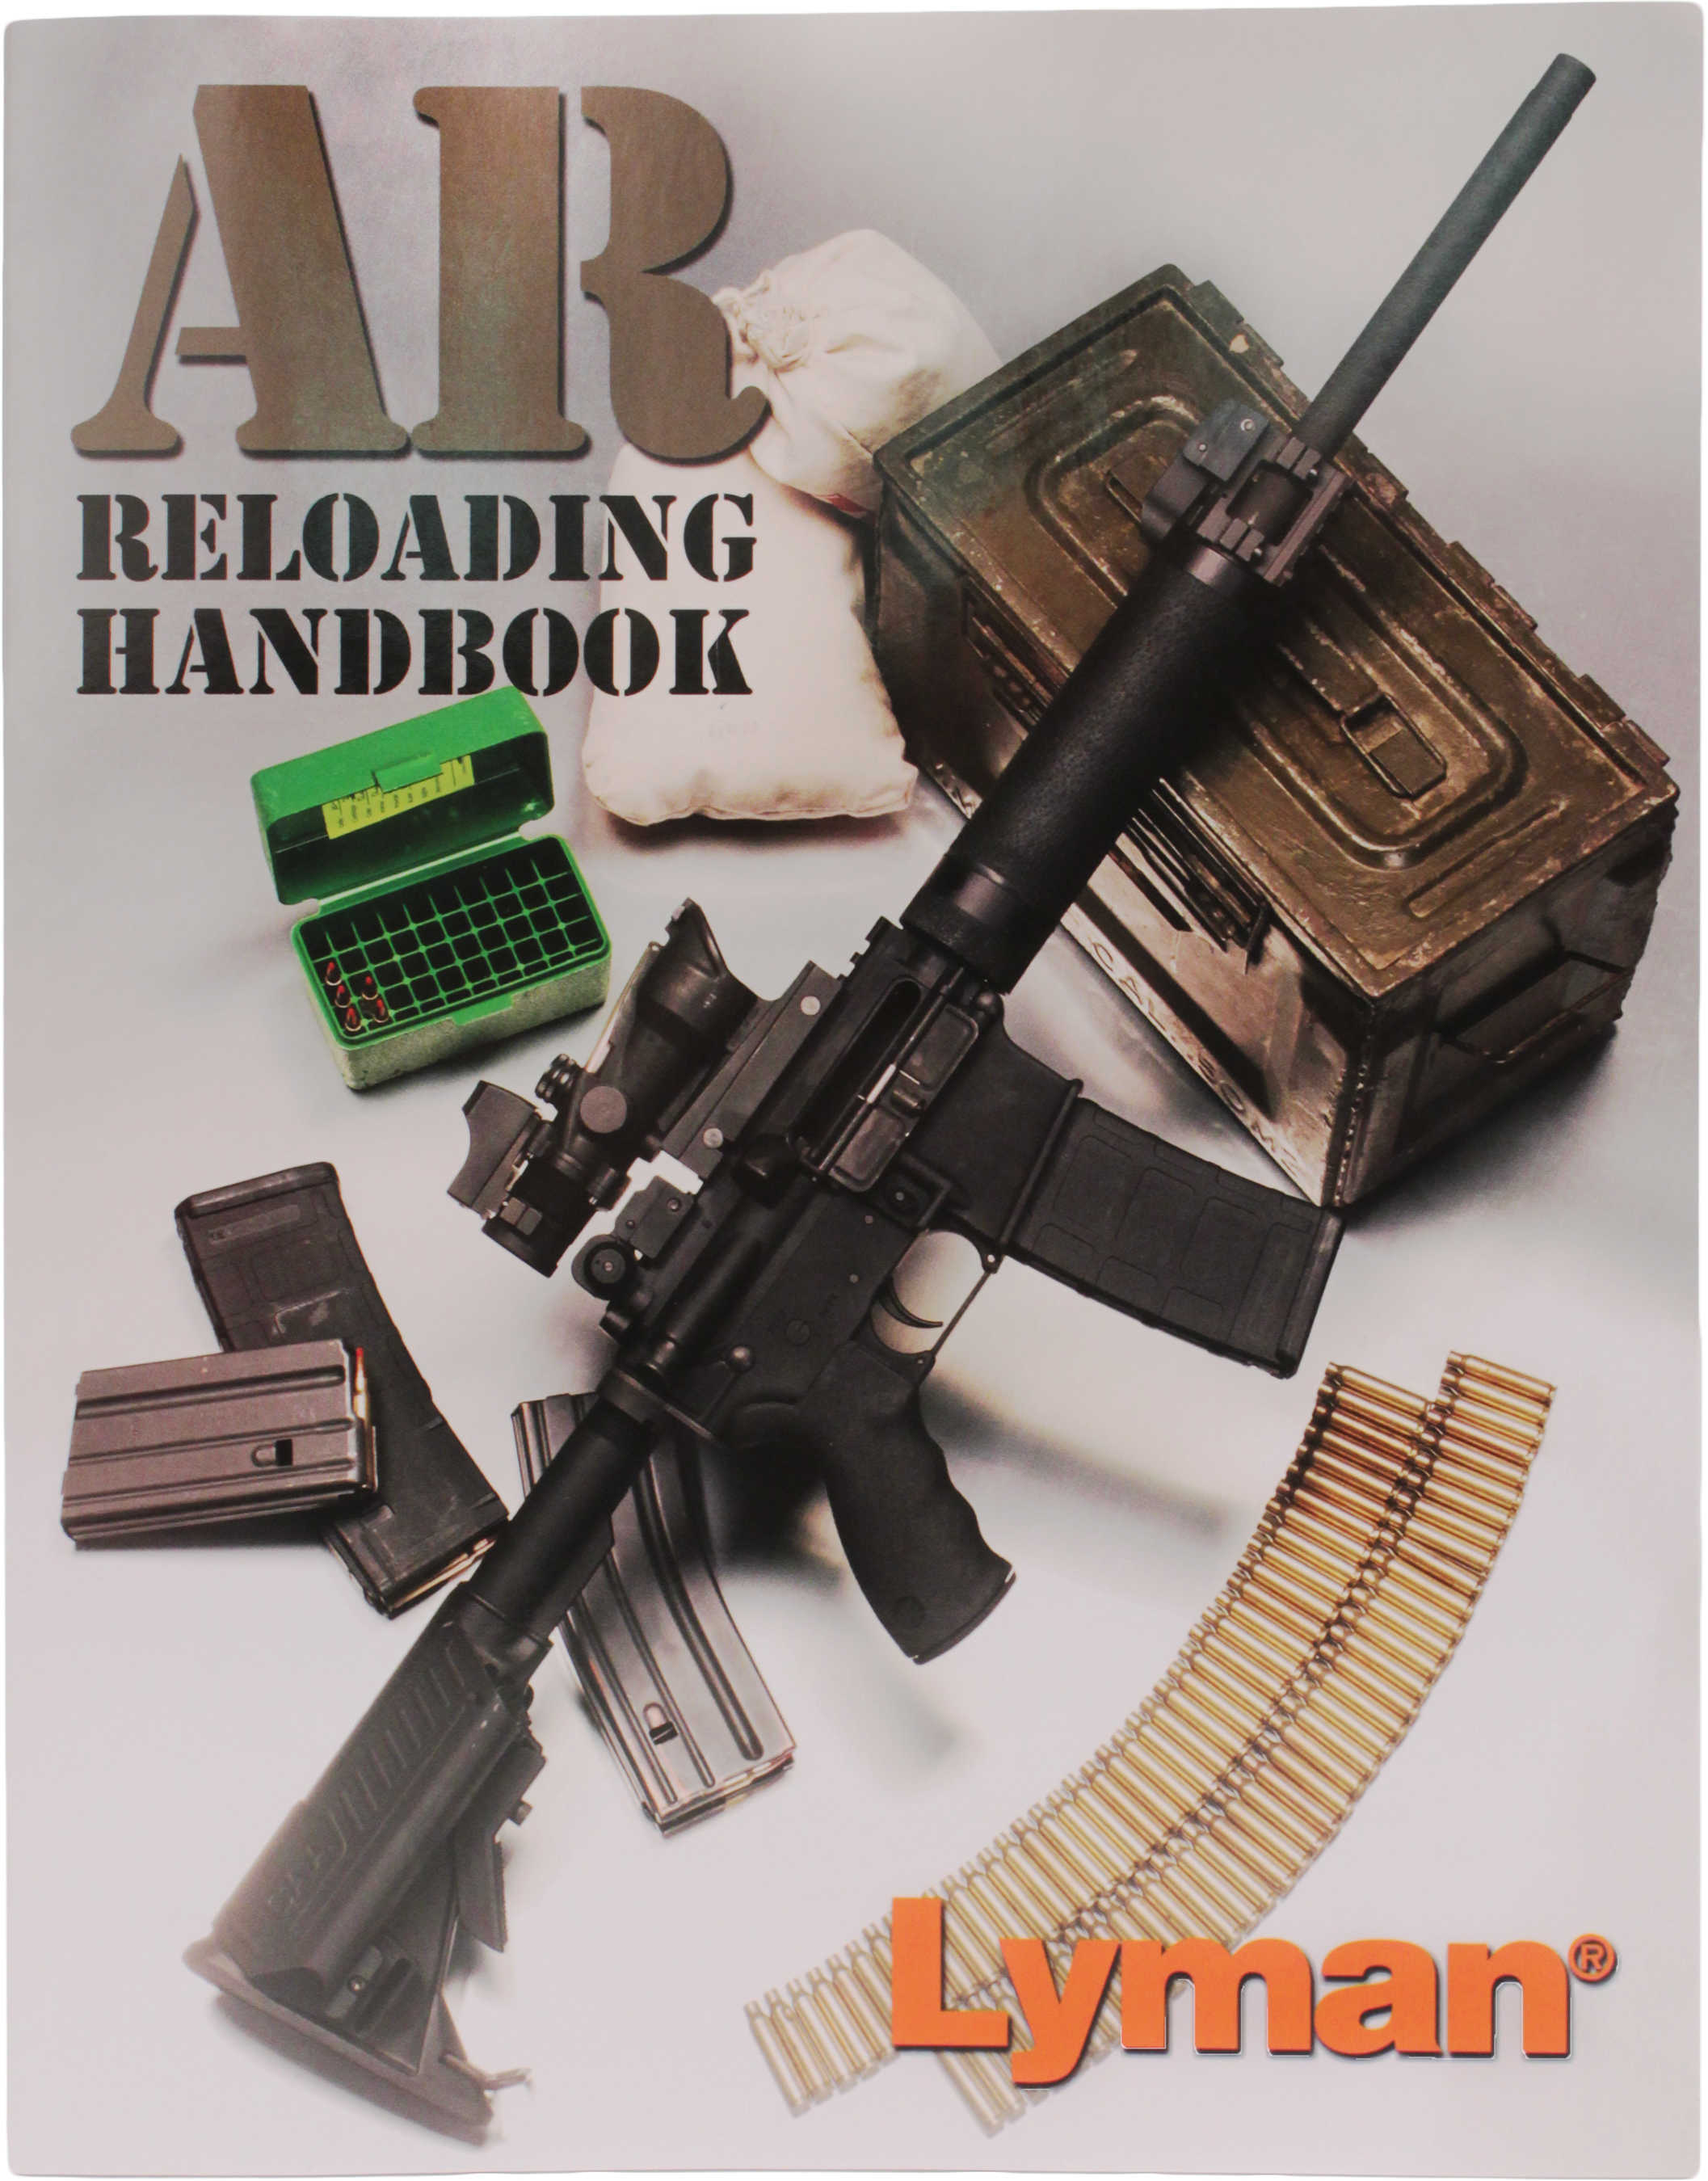 Lyman New Handbook "Reloading for the AR-Rifle"